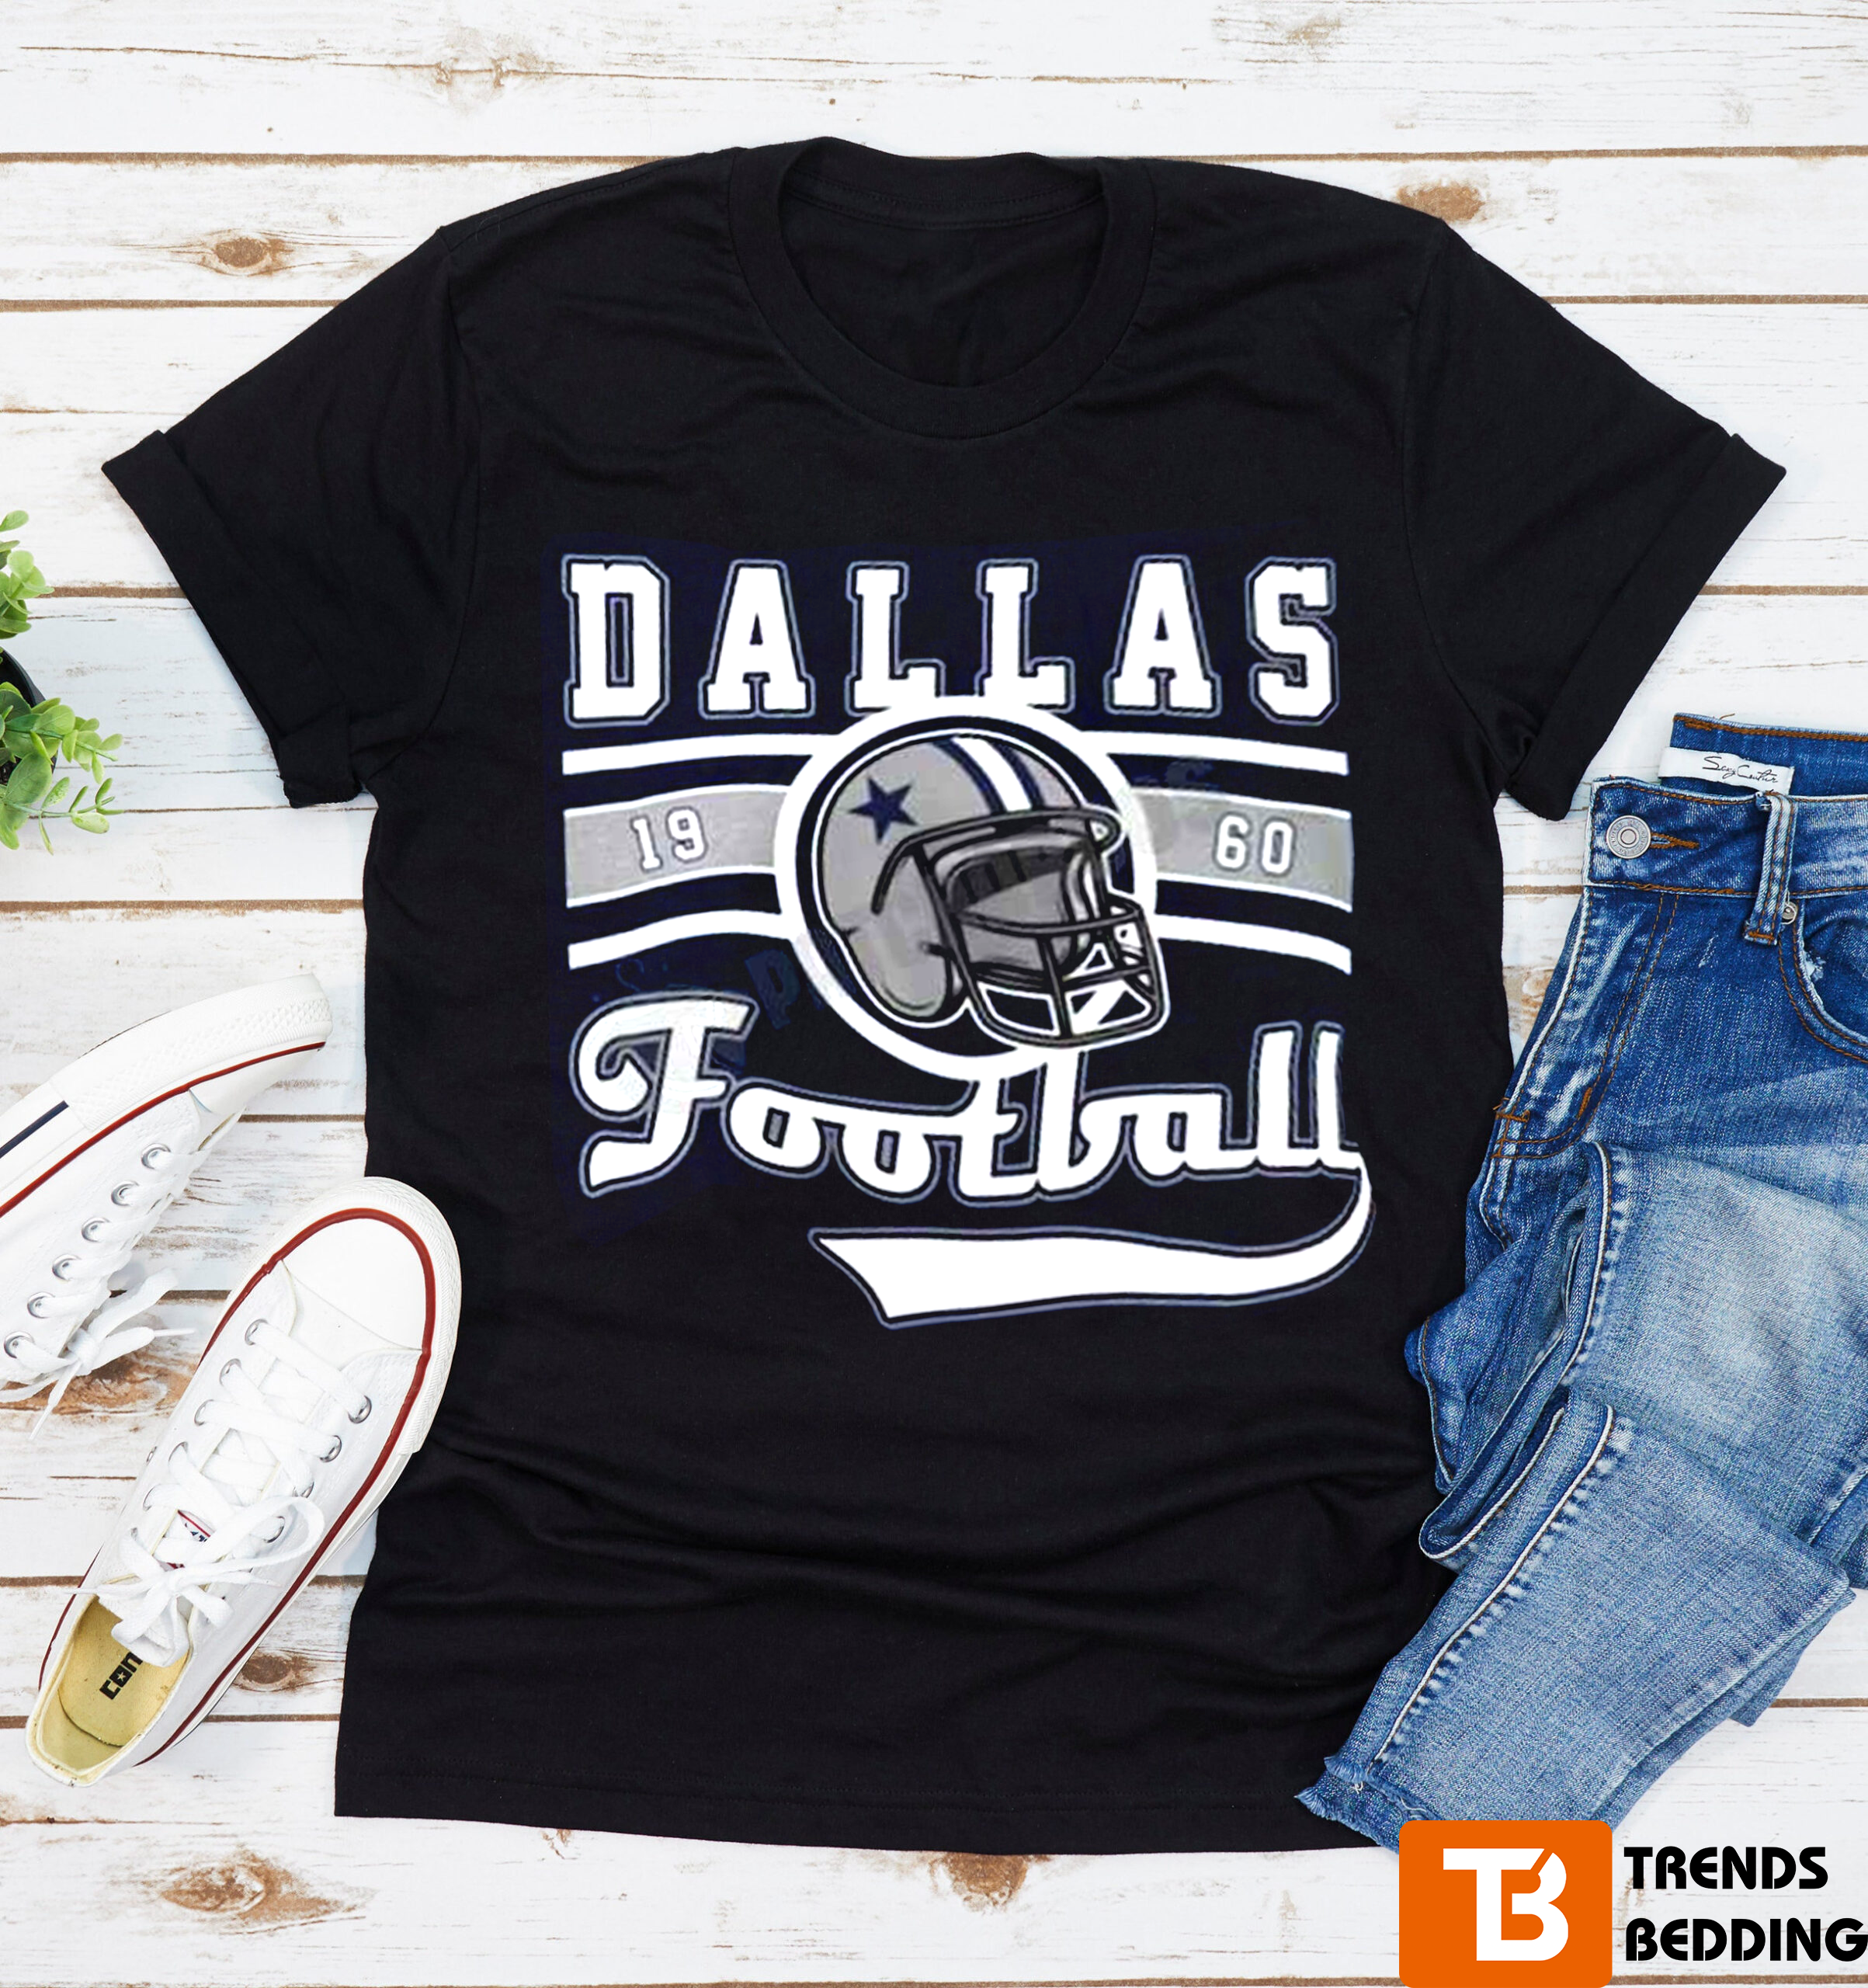 The Cowboys Fooball Dallas Cowboys T-shirt, Football Shirt For Fan